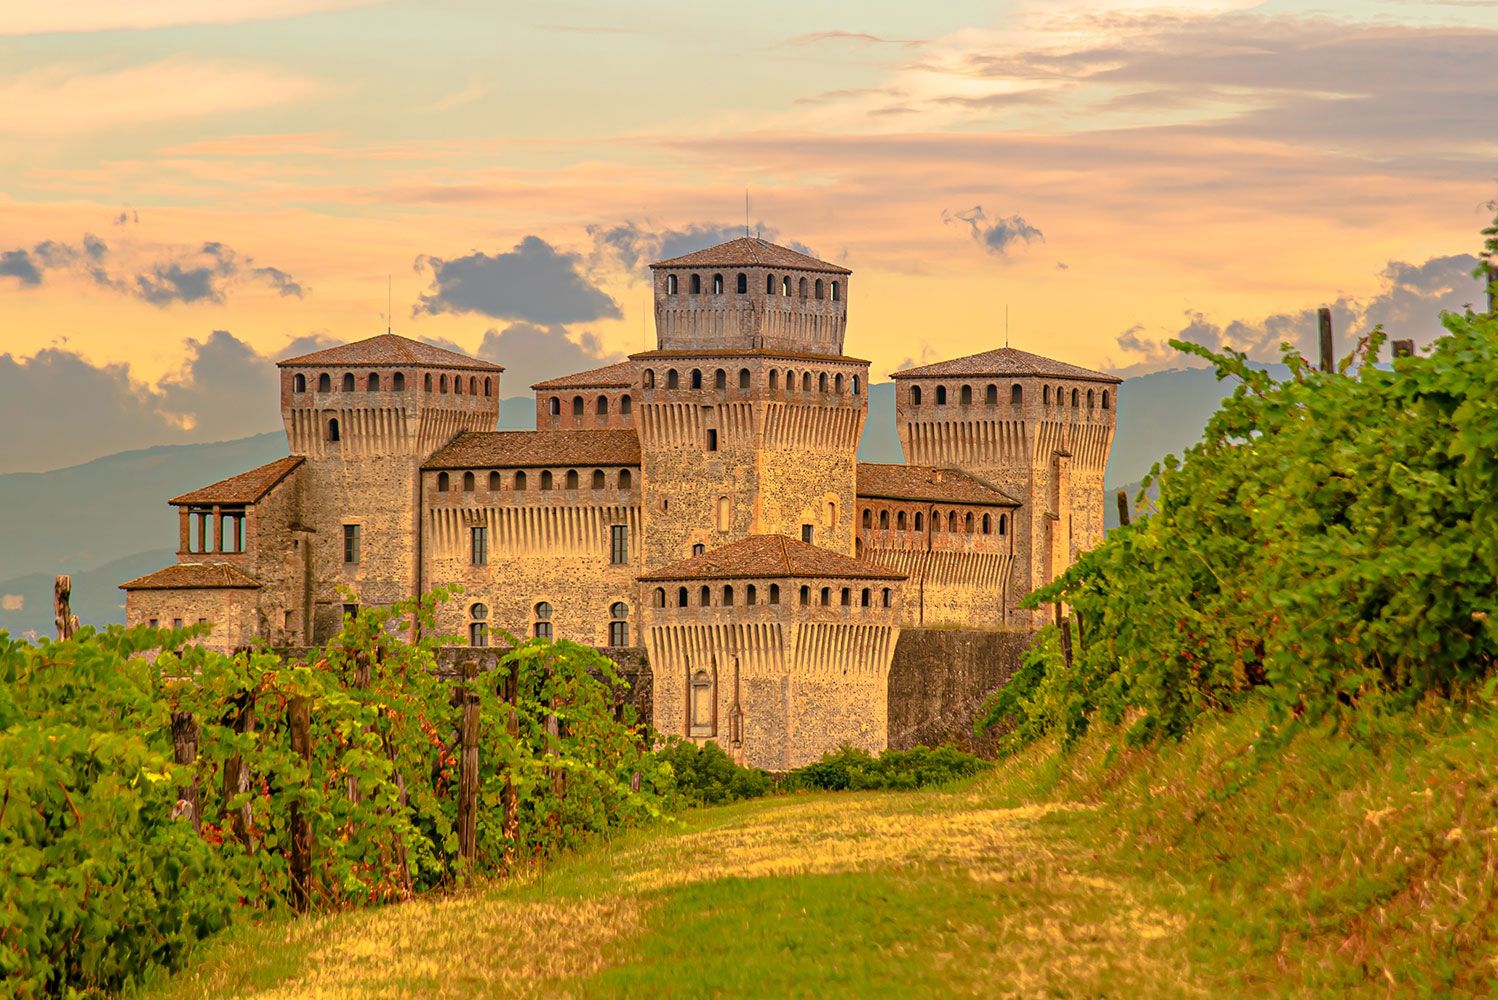 tour Castle of Torrechiara at parma